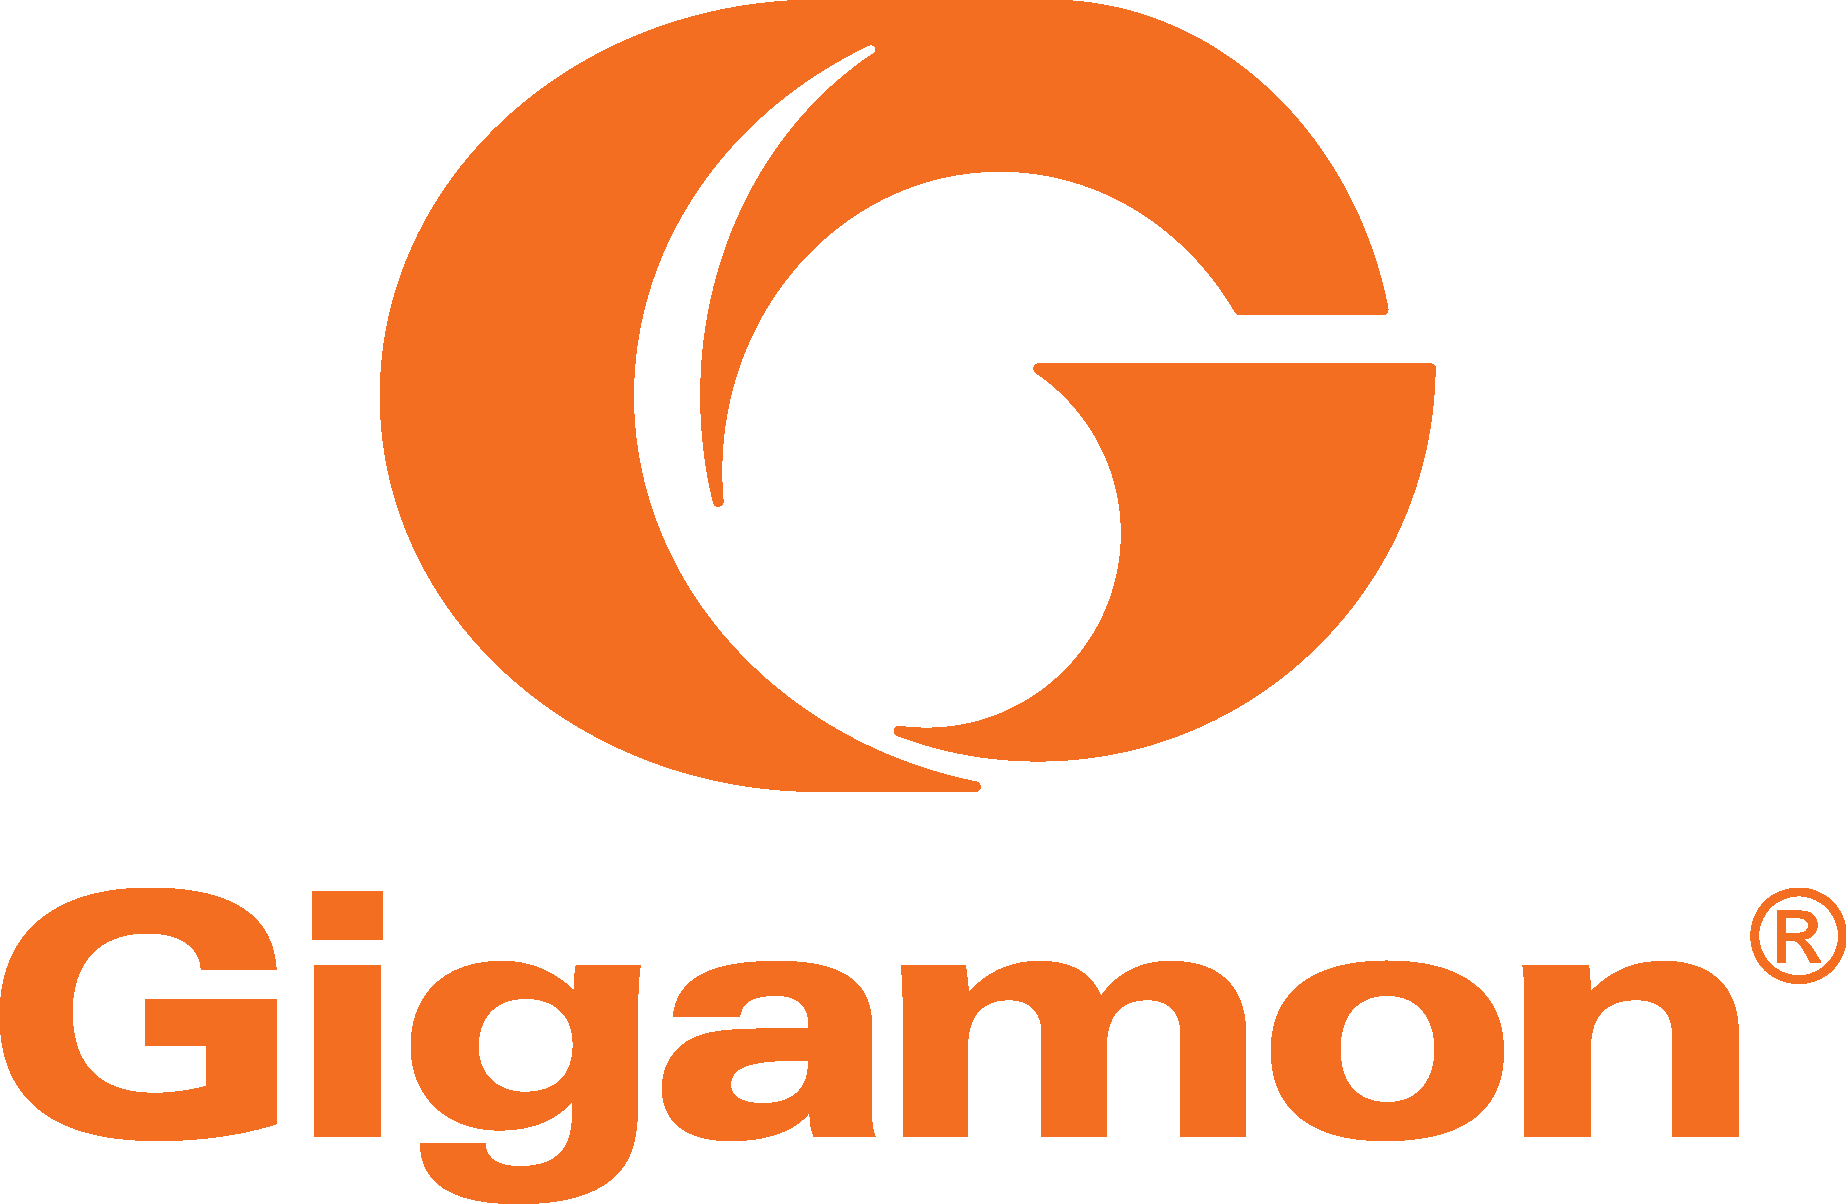 gigamon logo - ESG Research Report